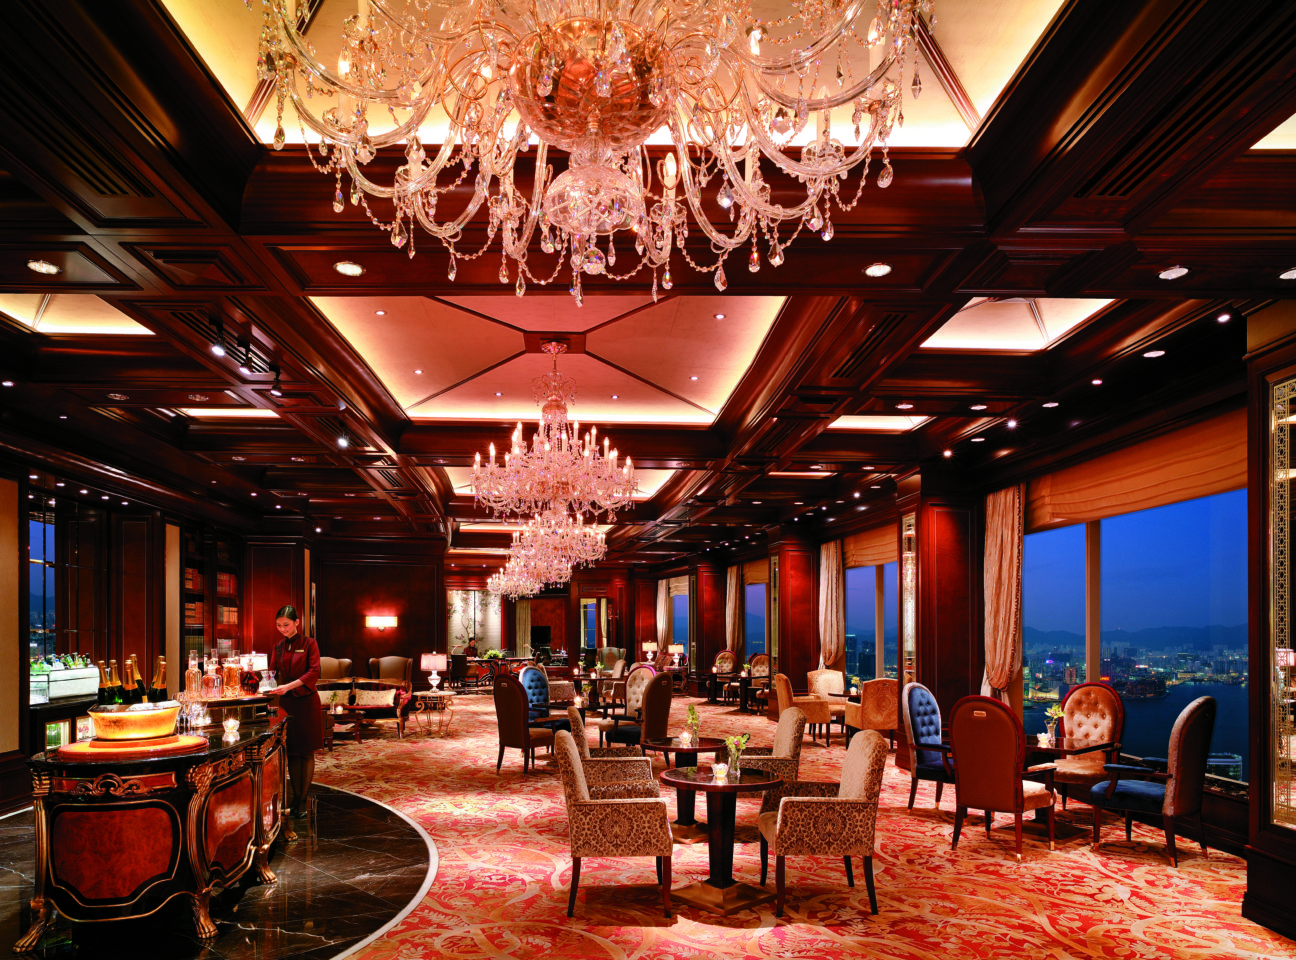 Horizon Club of Island Shangri La Hotel in Hong Kong